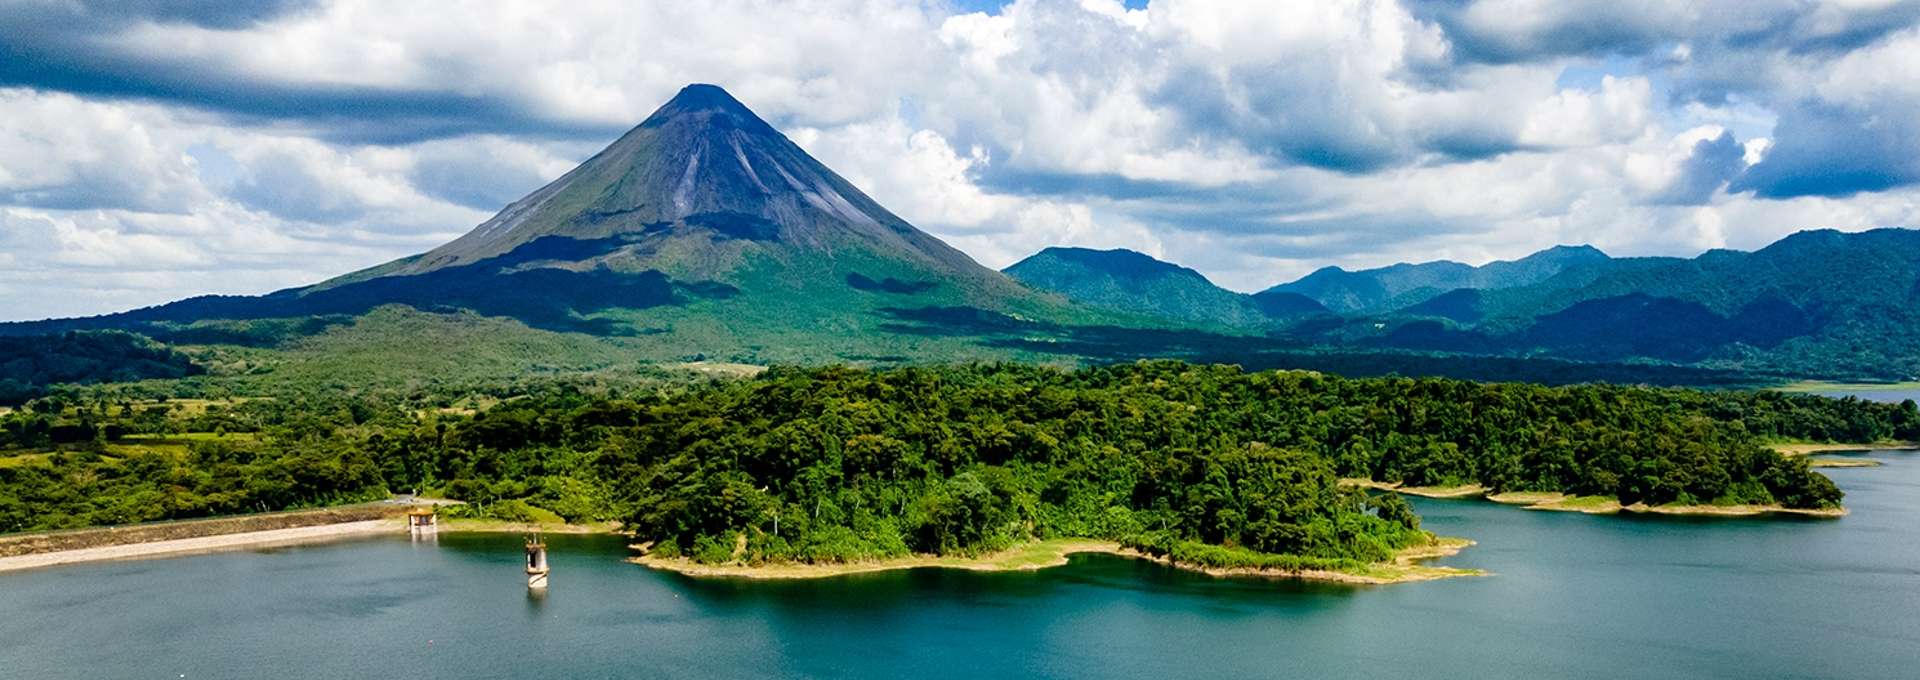 Costa Rica Volcán Arenal